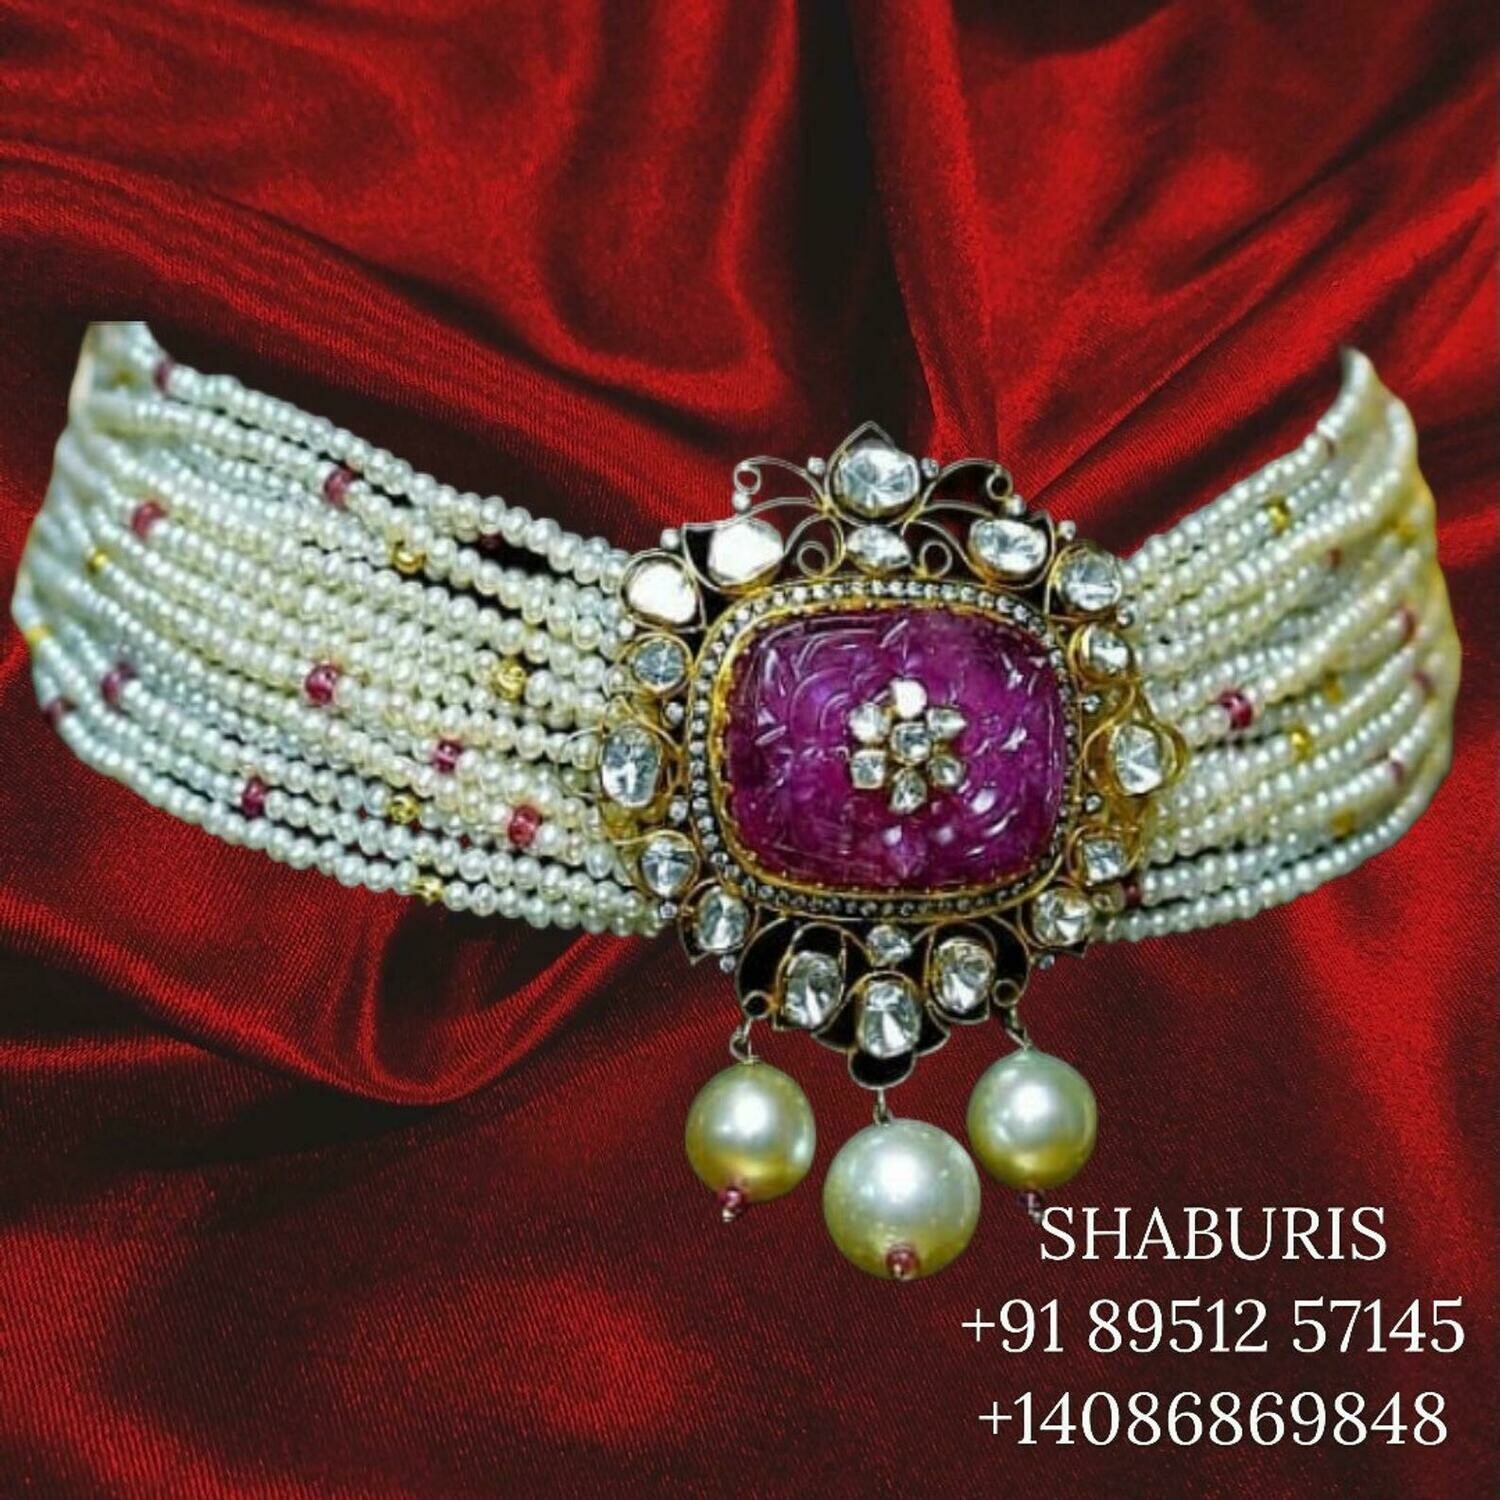 Polki Jewelry,Pure Silver Jewelry Indian ,pearl choker,ruby gem stone jewelry,Indian Bridal,Indian Wedding Jewelry-NIHIRA-SHABURIS